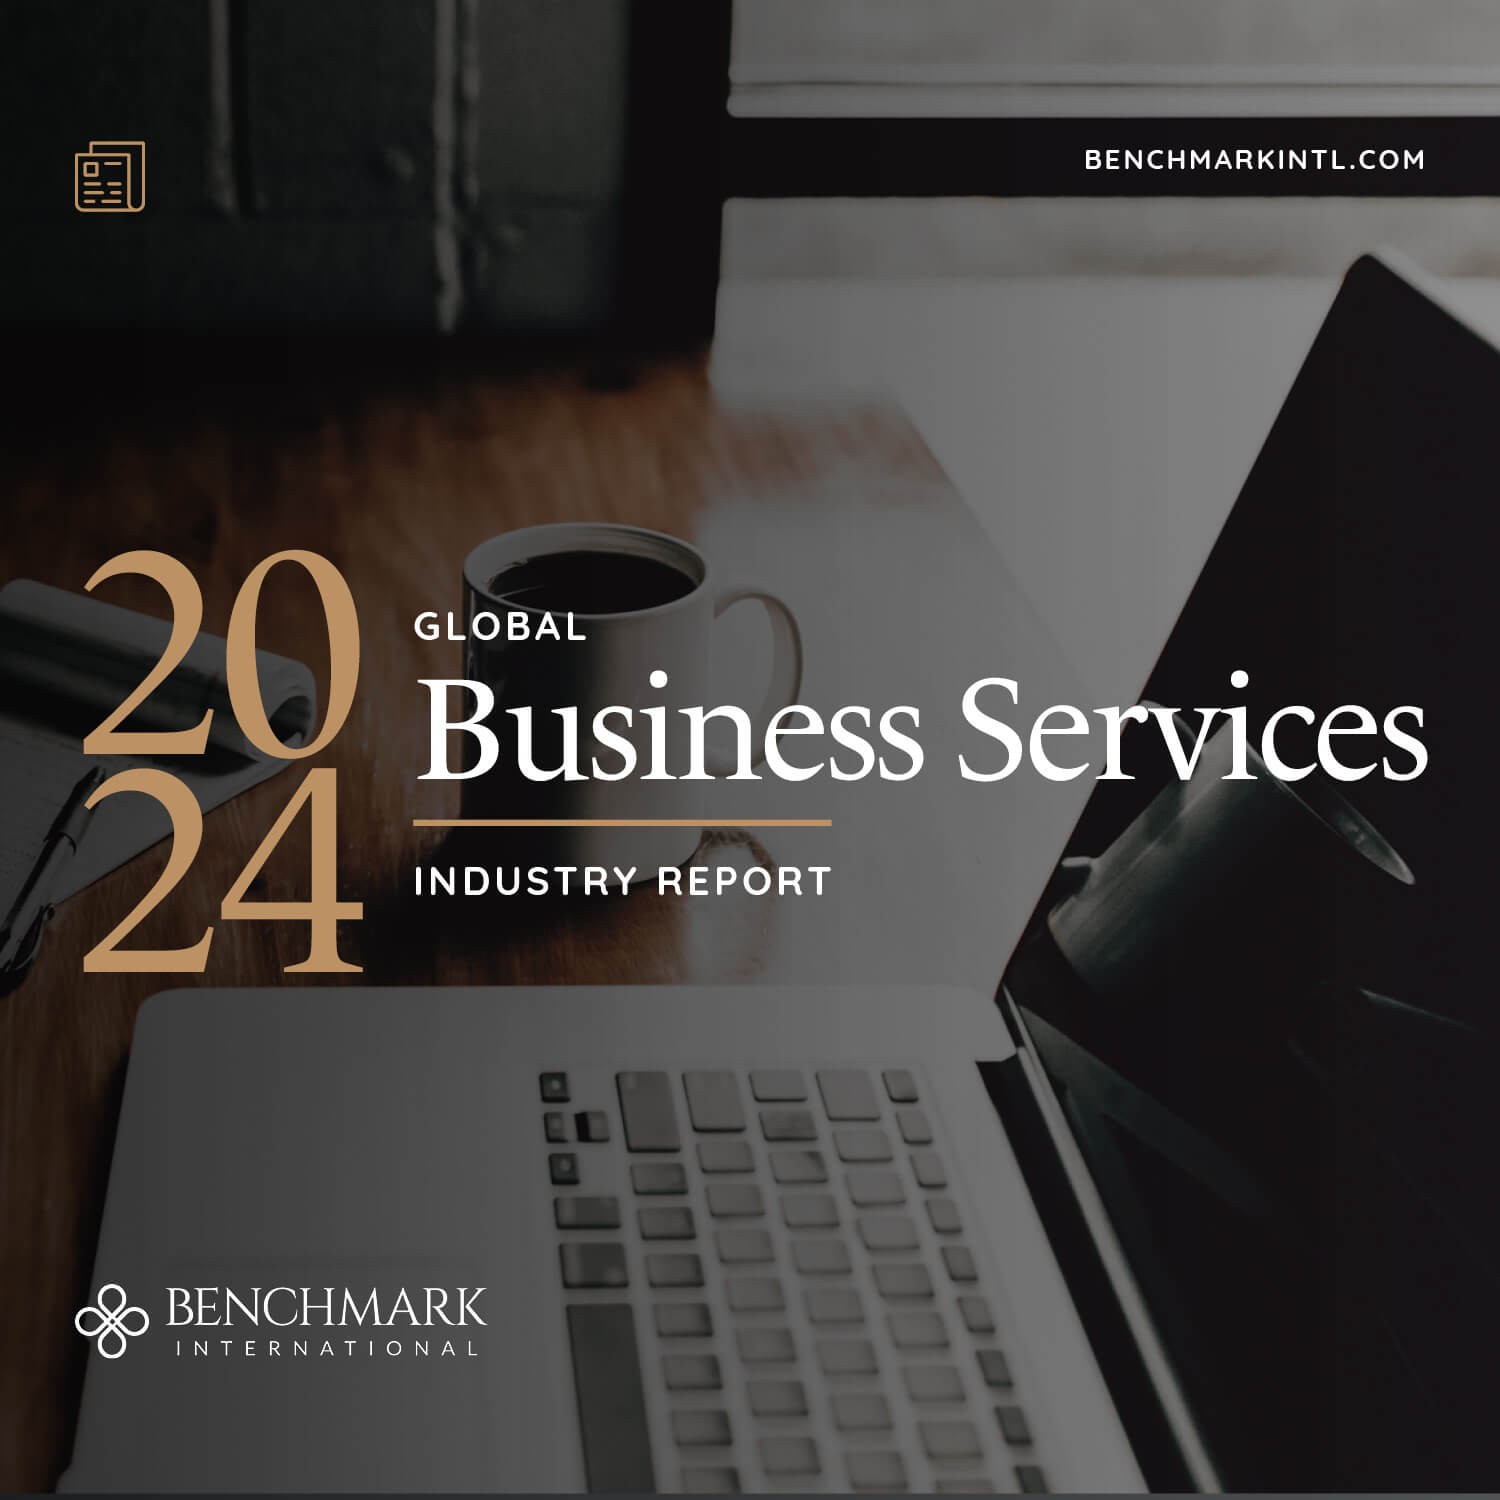 MRKTG_Social_Blog_Mobile_Industry_Report_Business_Services